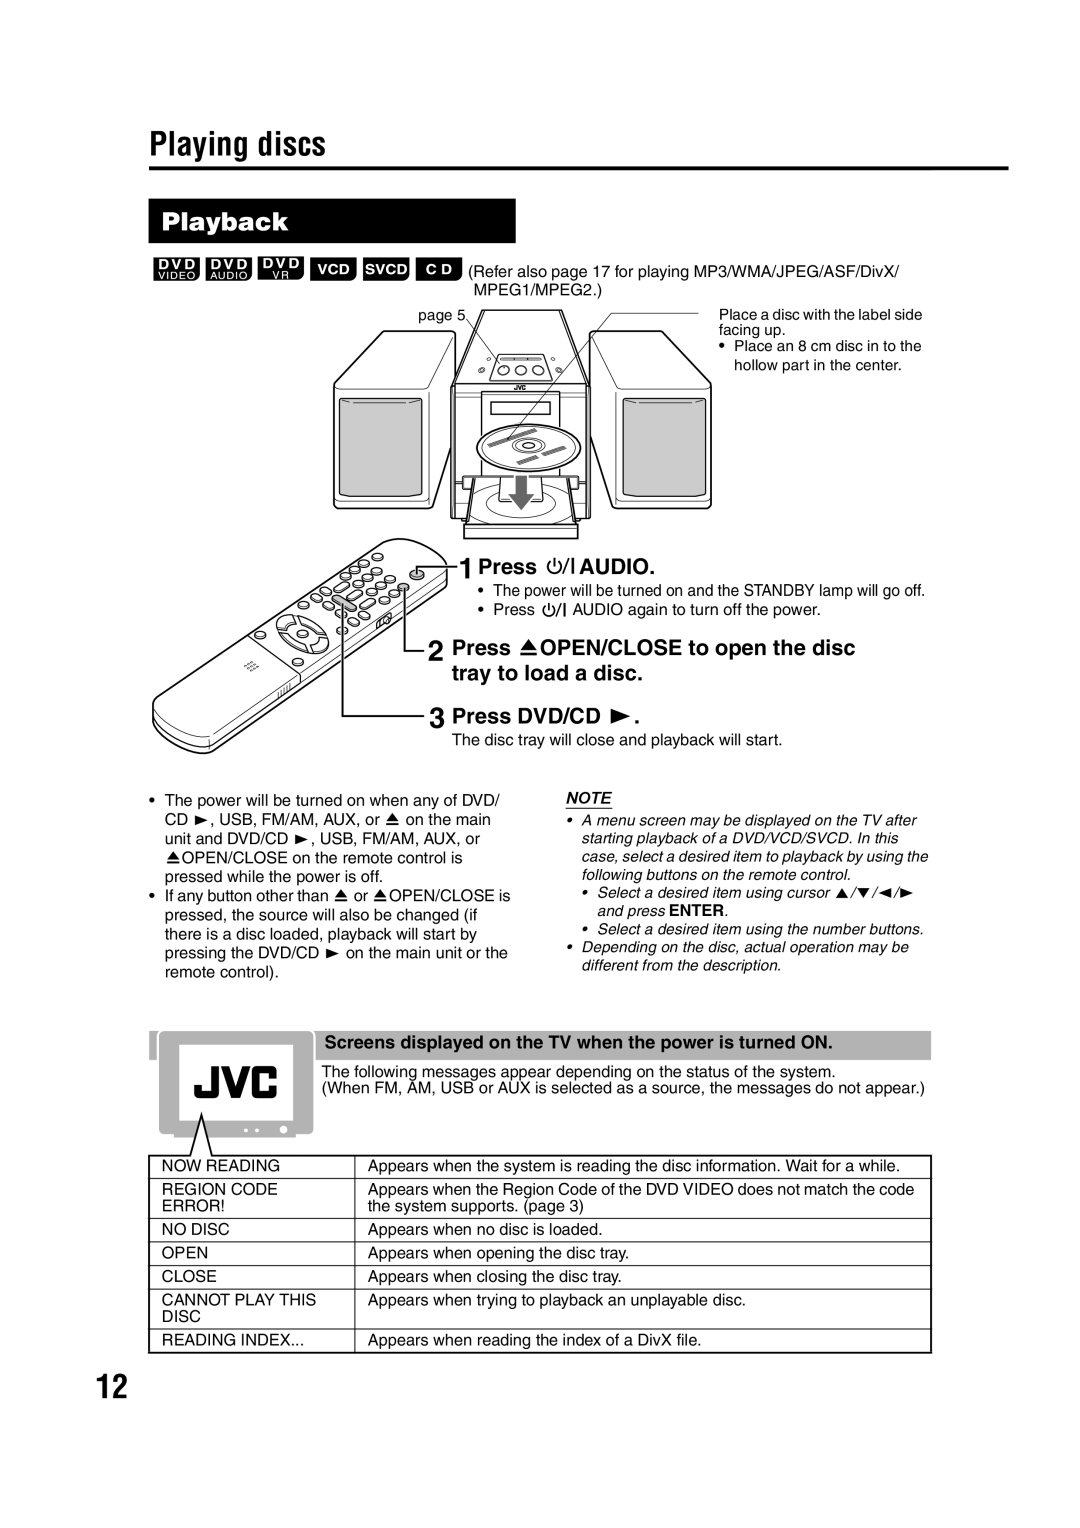 JVC EX-D11 manual Playing discs, Playback, Press AUDIO, Press DVD/CD, MPEG1/MPEG2 